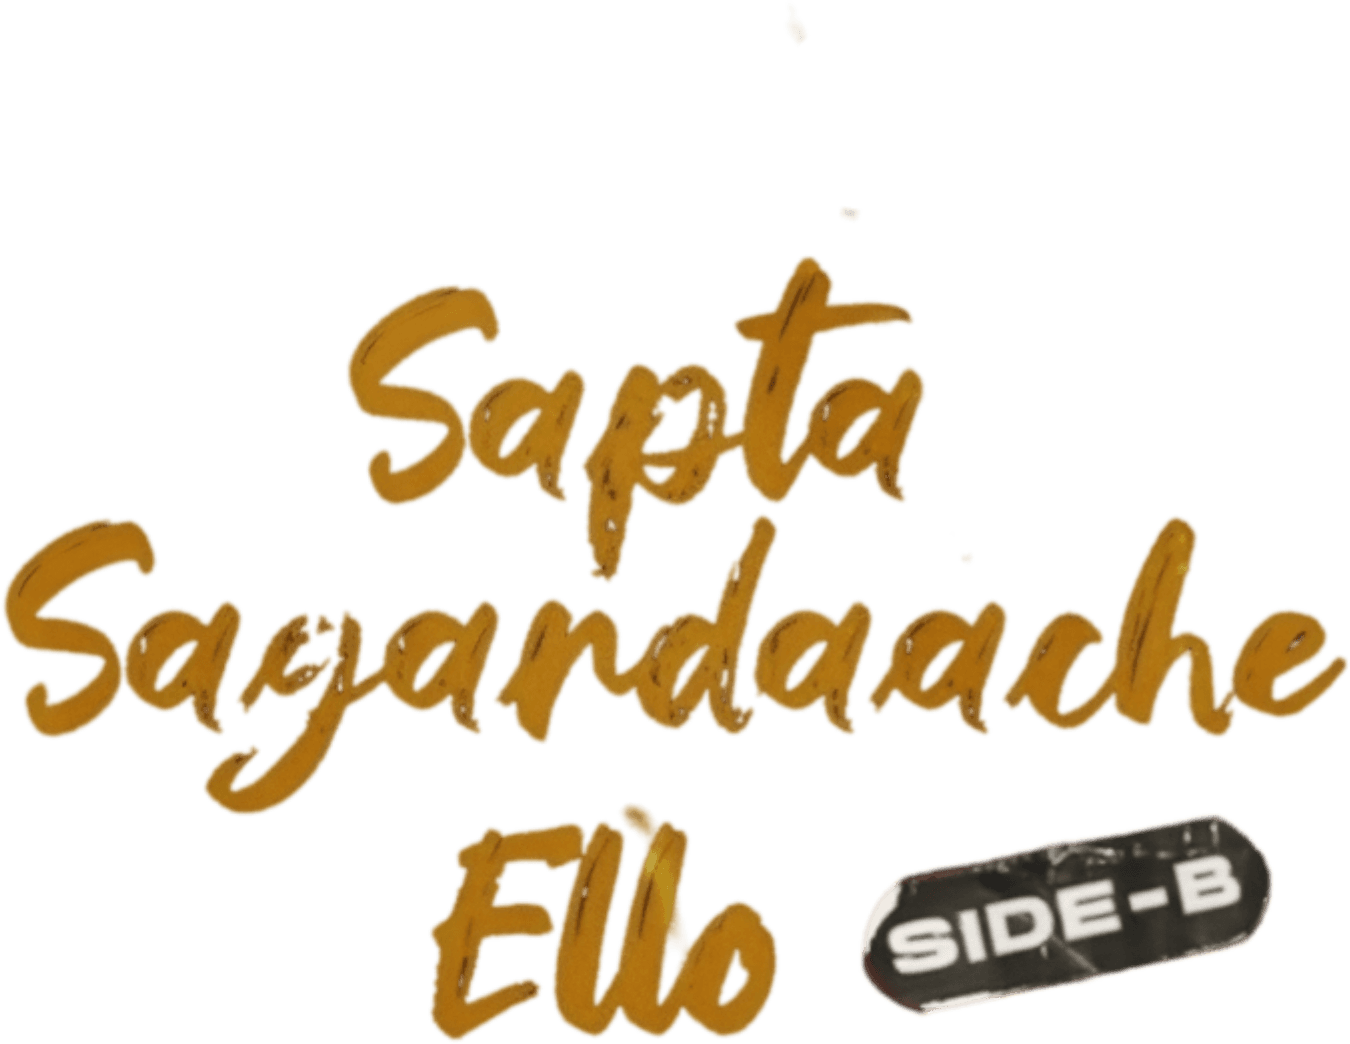 Sapta Sagaradaache Ello - Side B logo